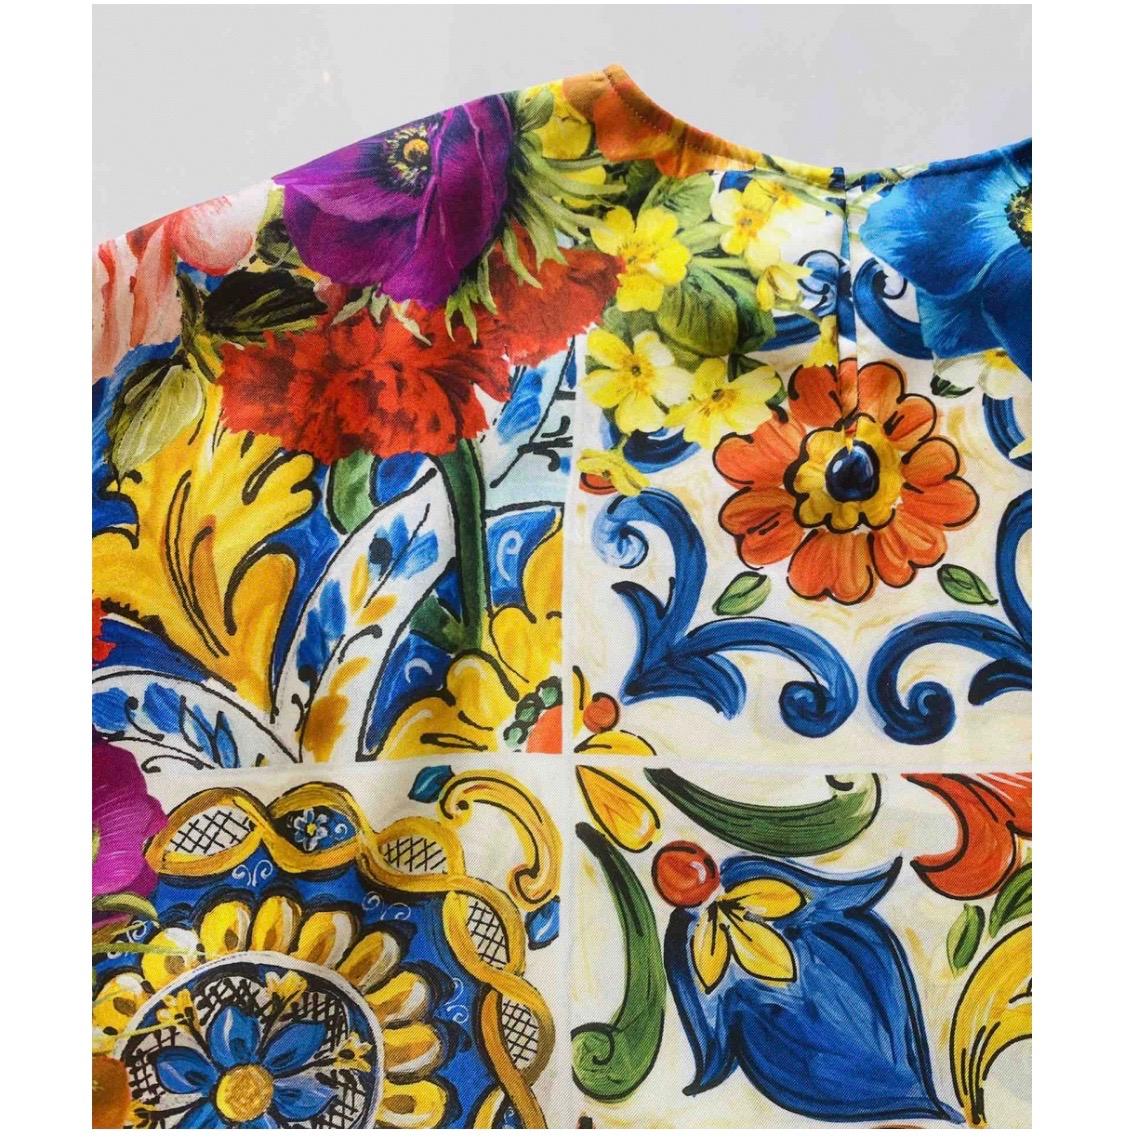 Brown Dolce & Gabbana Sicily Maiolica
Rose Floral printed silk top T-shirt
blouse